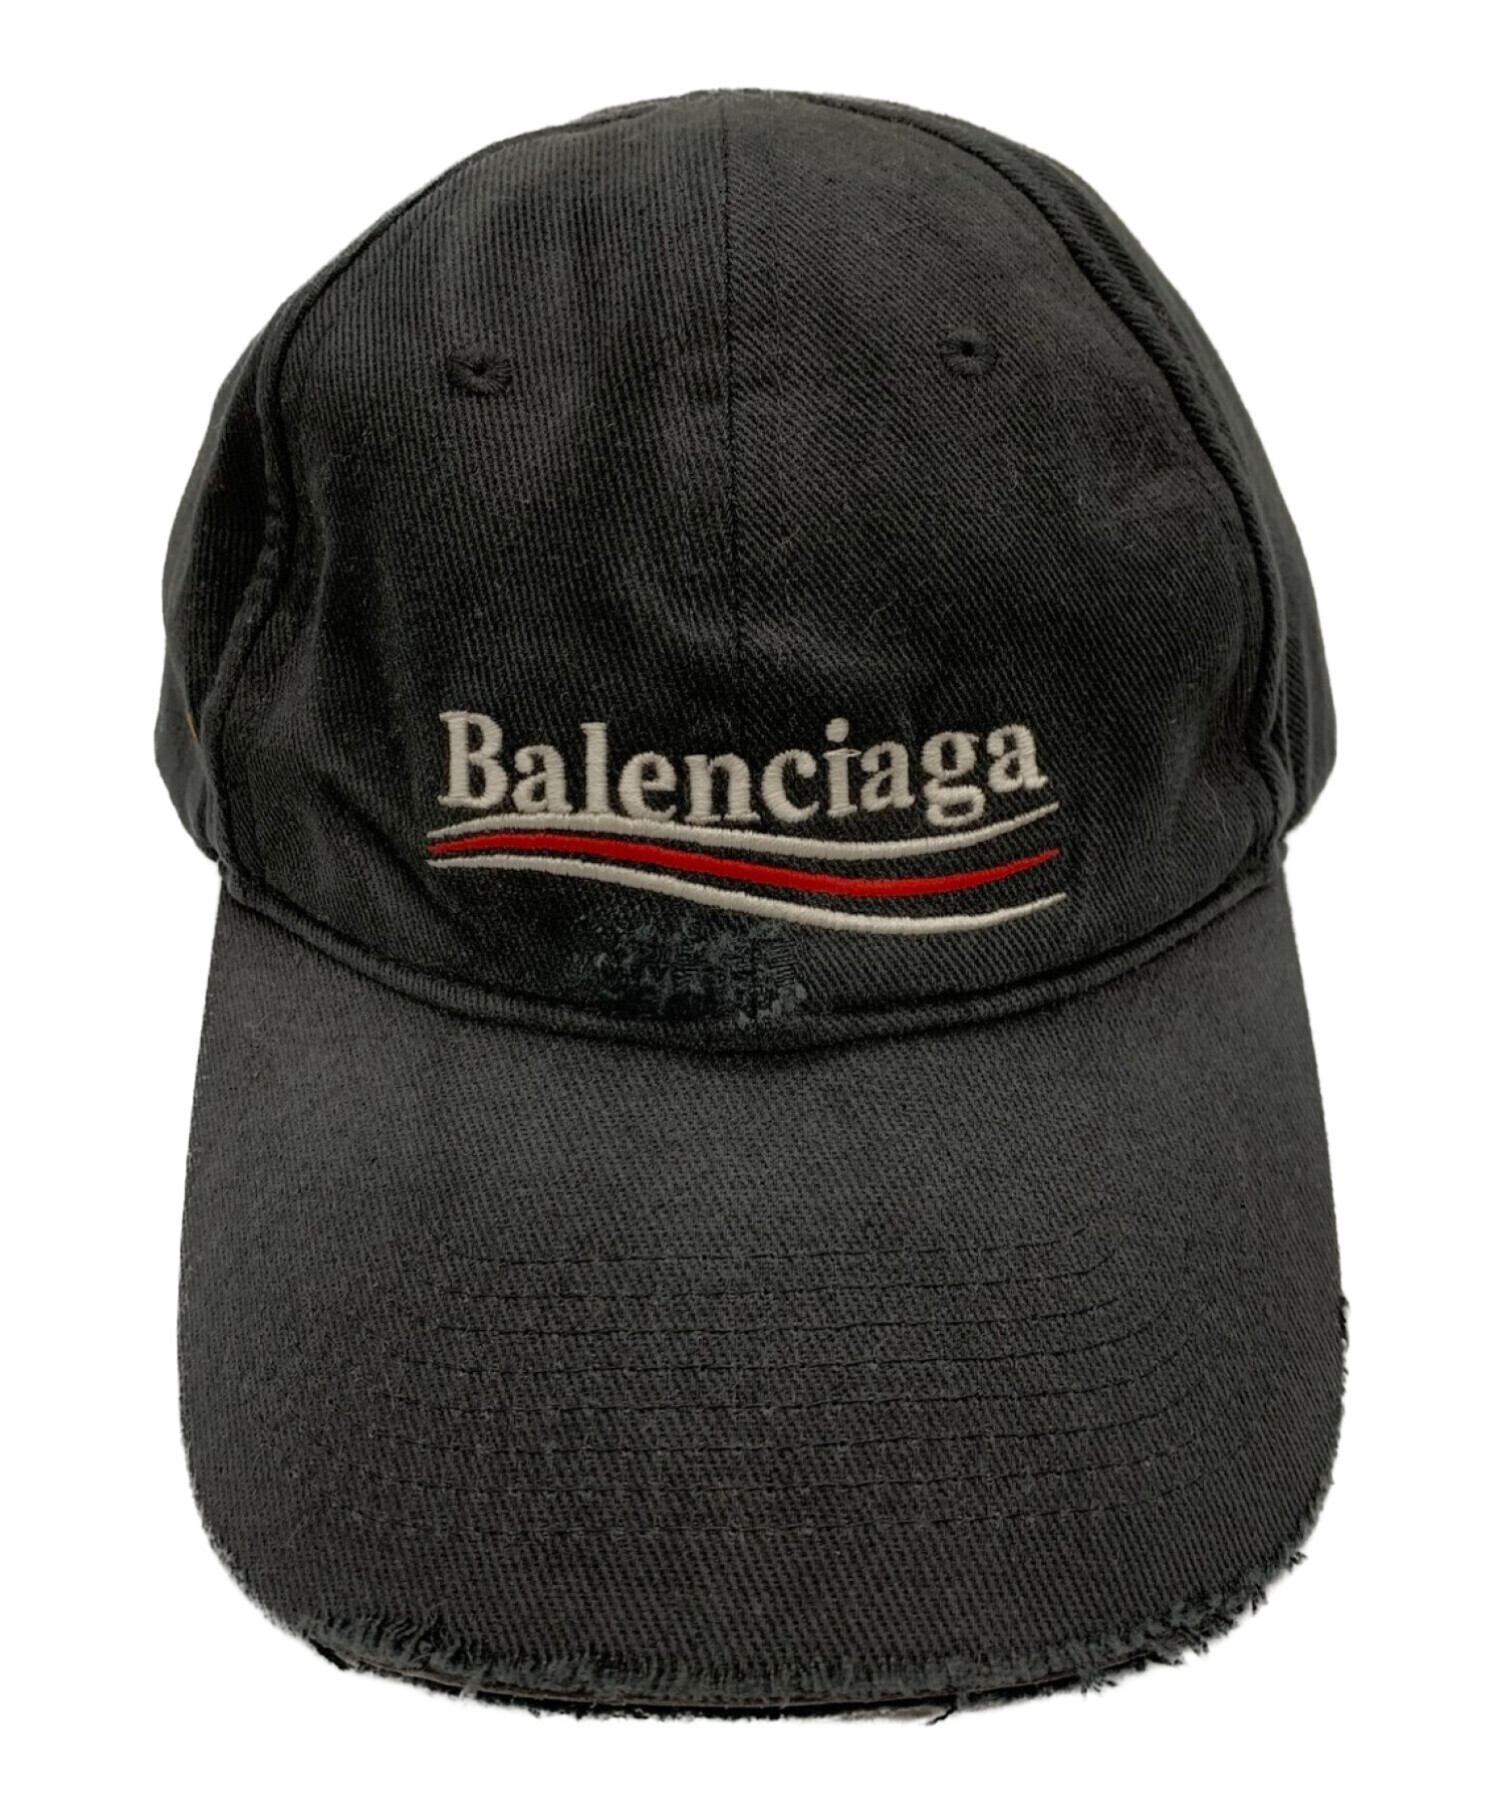 BALENCIAGA cap キャップ L59cm帽子 - www.kairosinsurancegroup.com